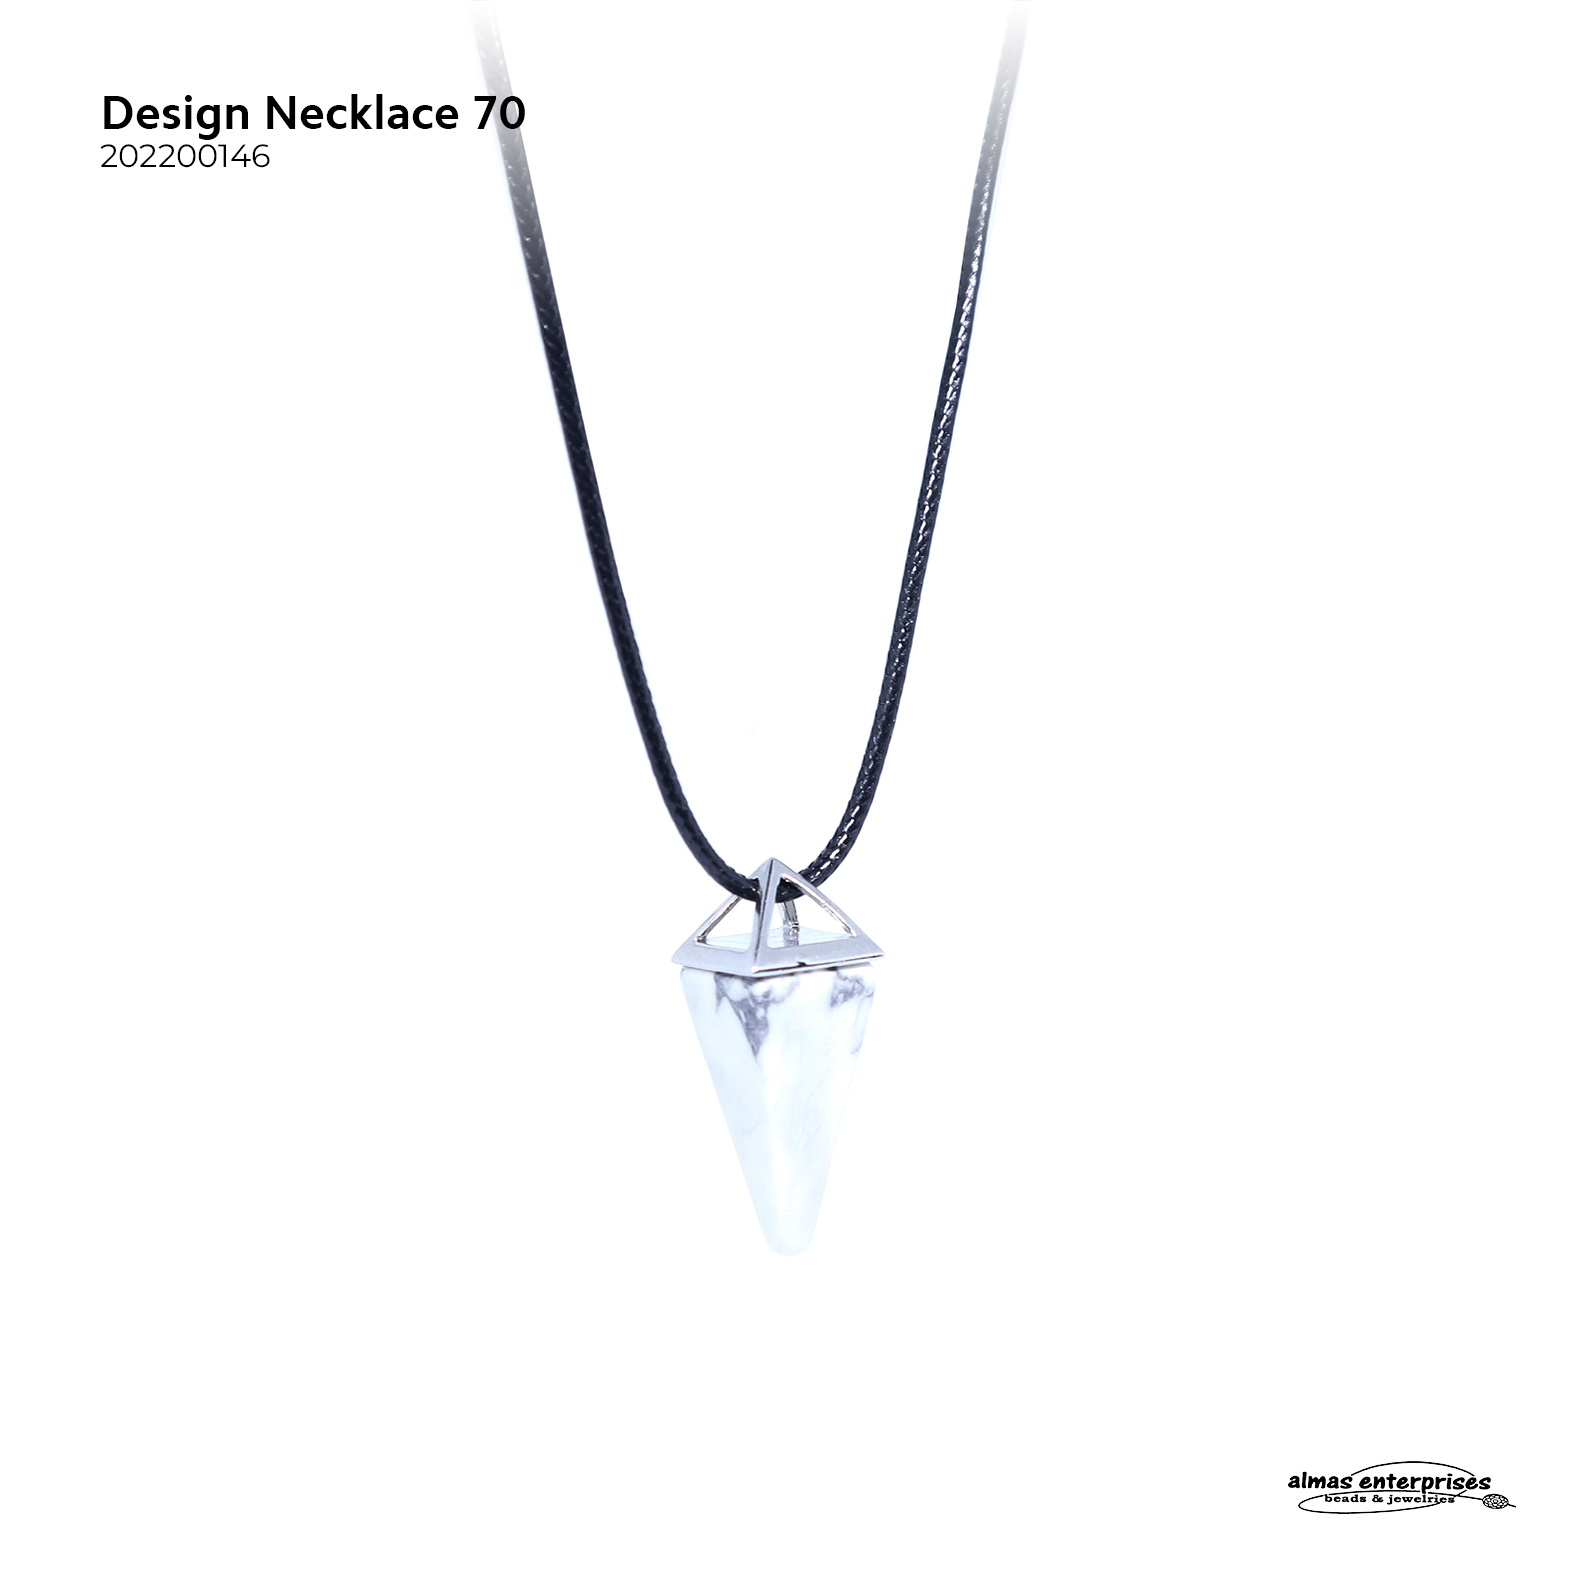 Design Necklace 70